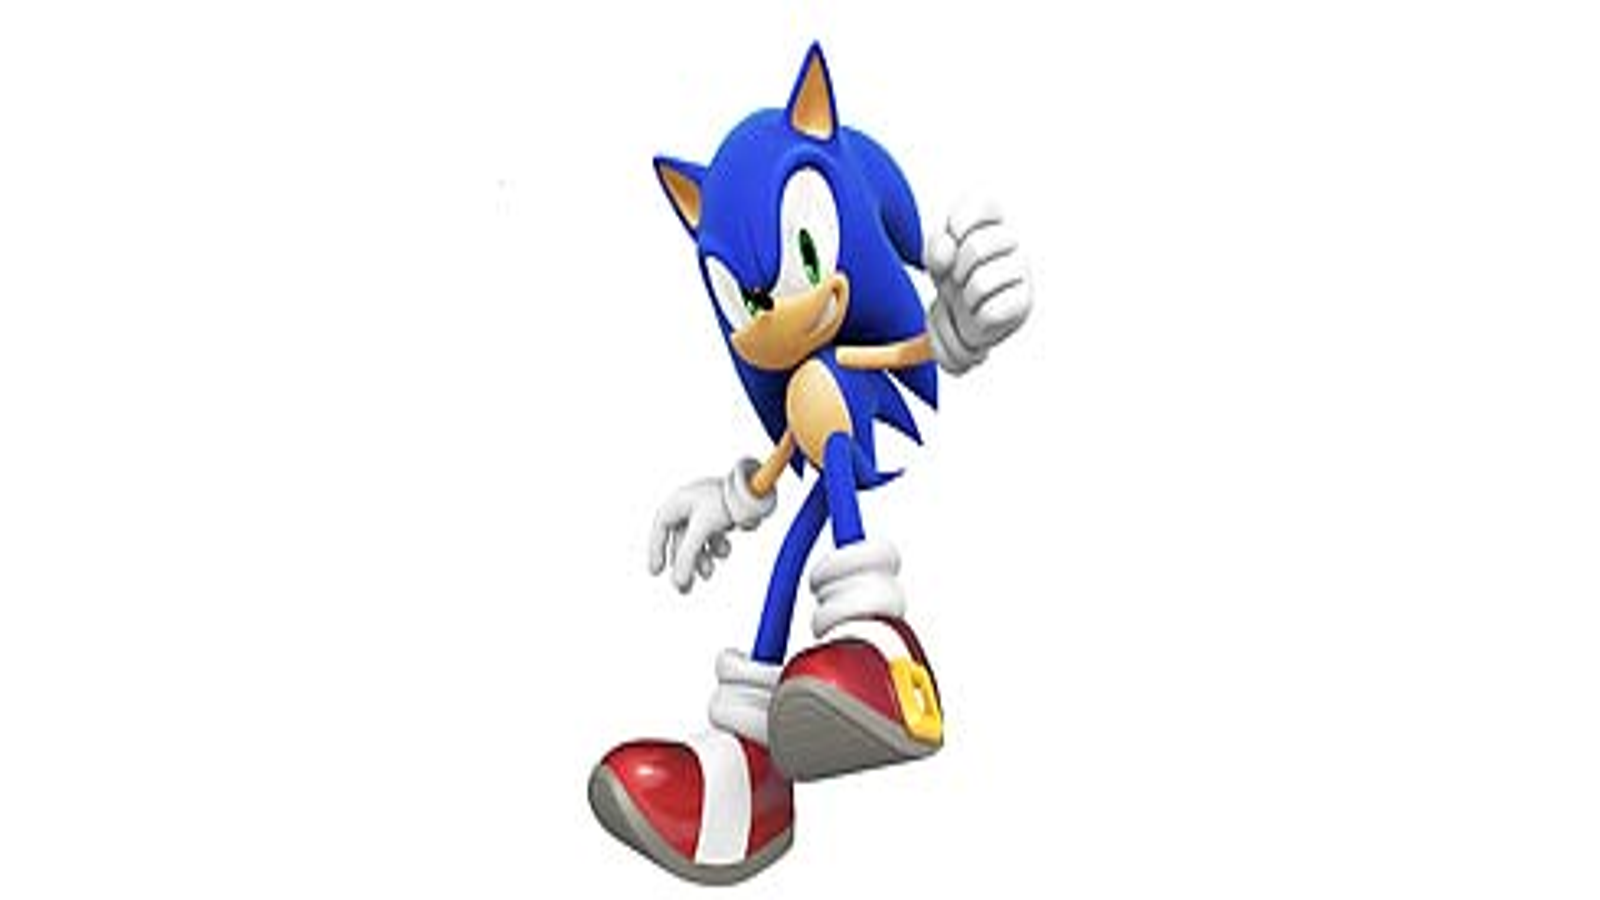 Sonic Colors - Metacritic